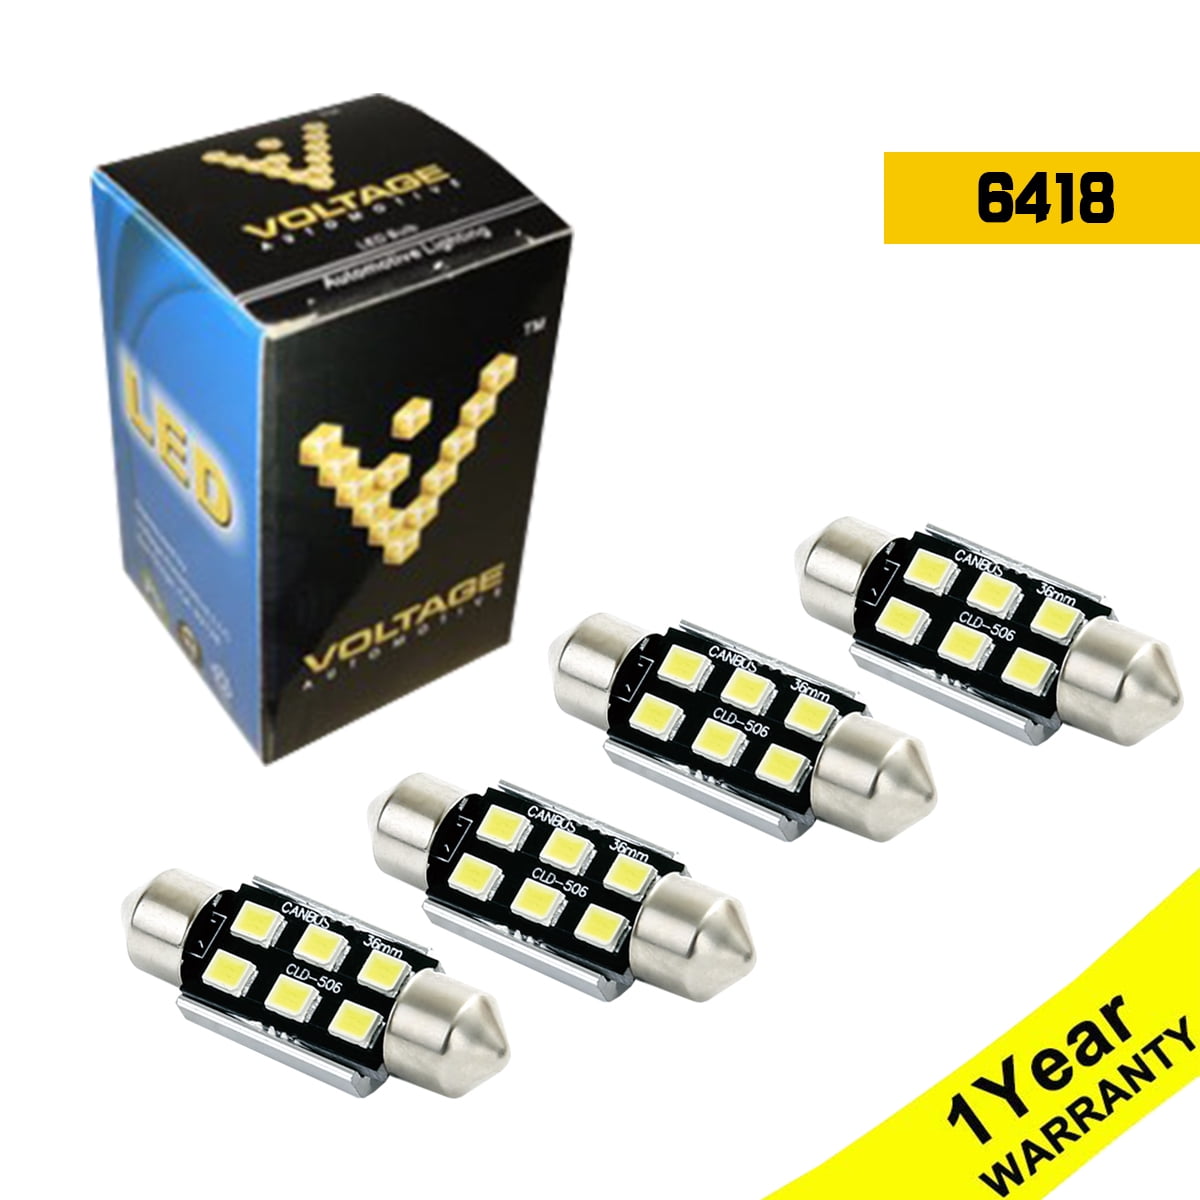 Voltage Automotive LED 6418 Festoon Bulb T11 35mm For License